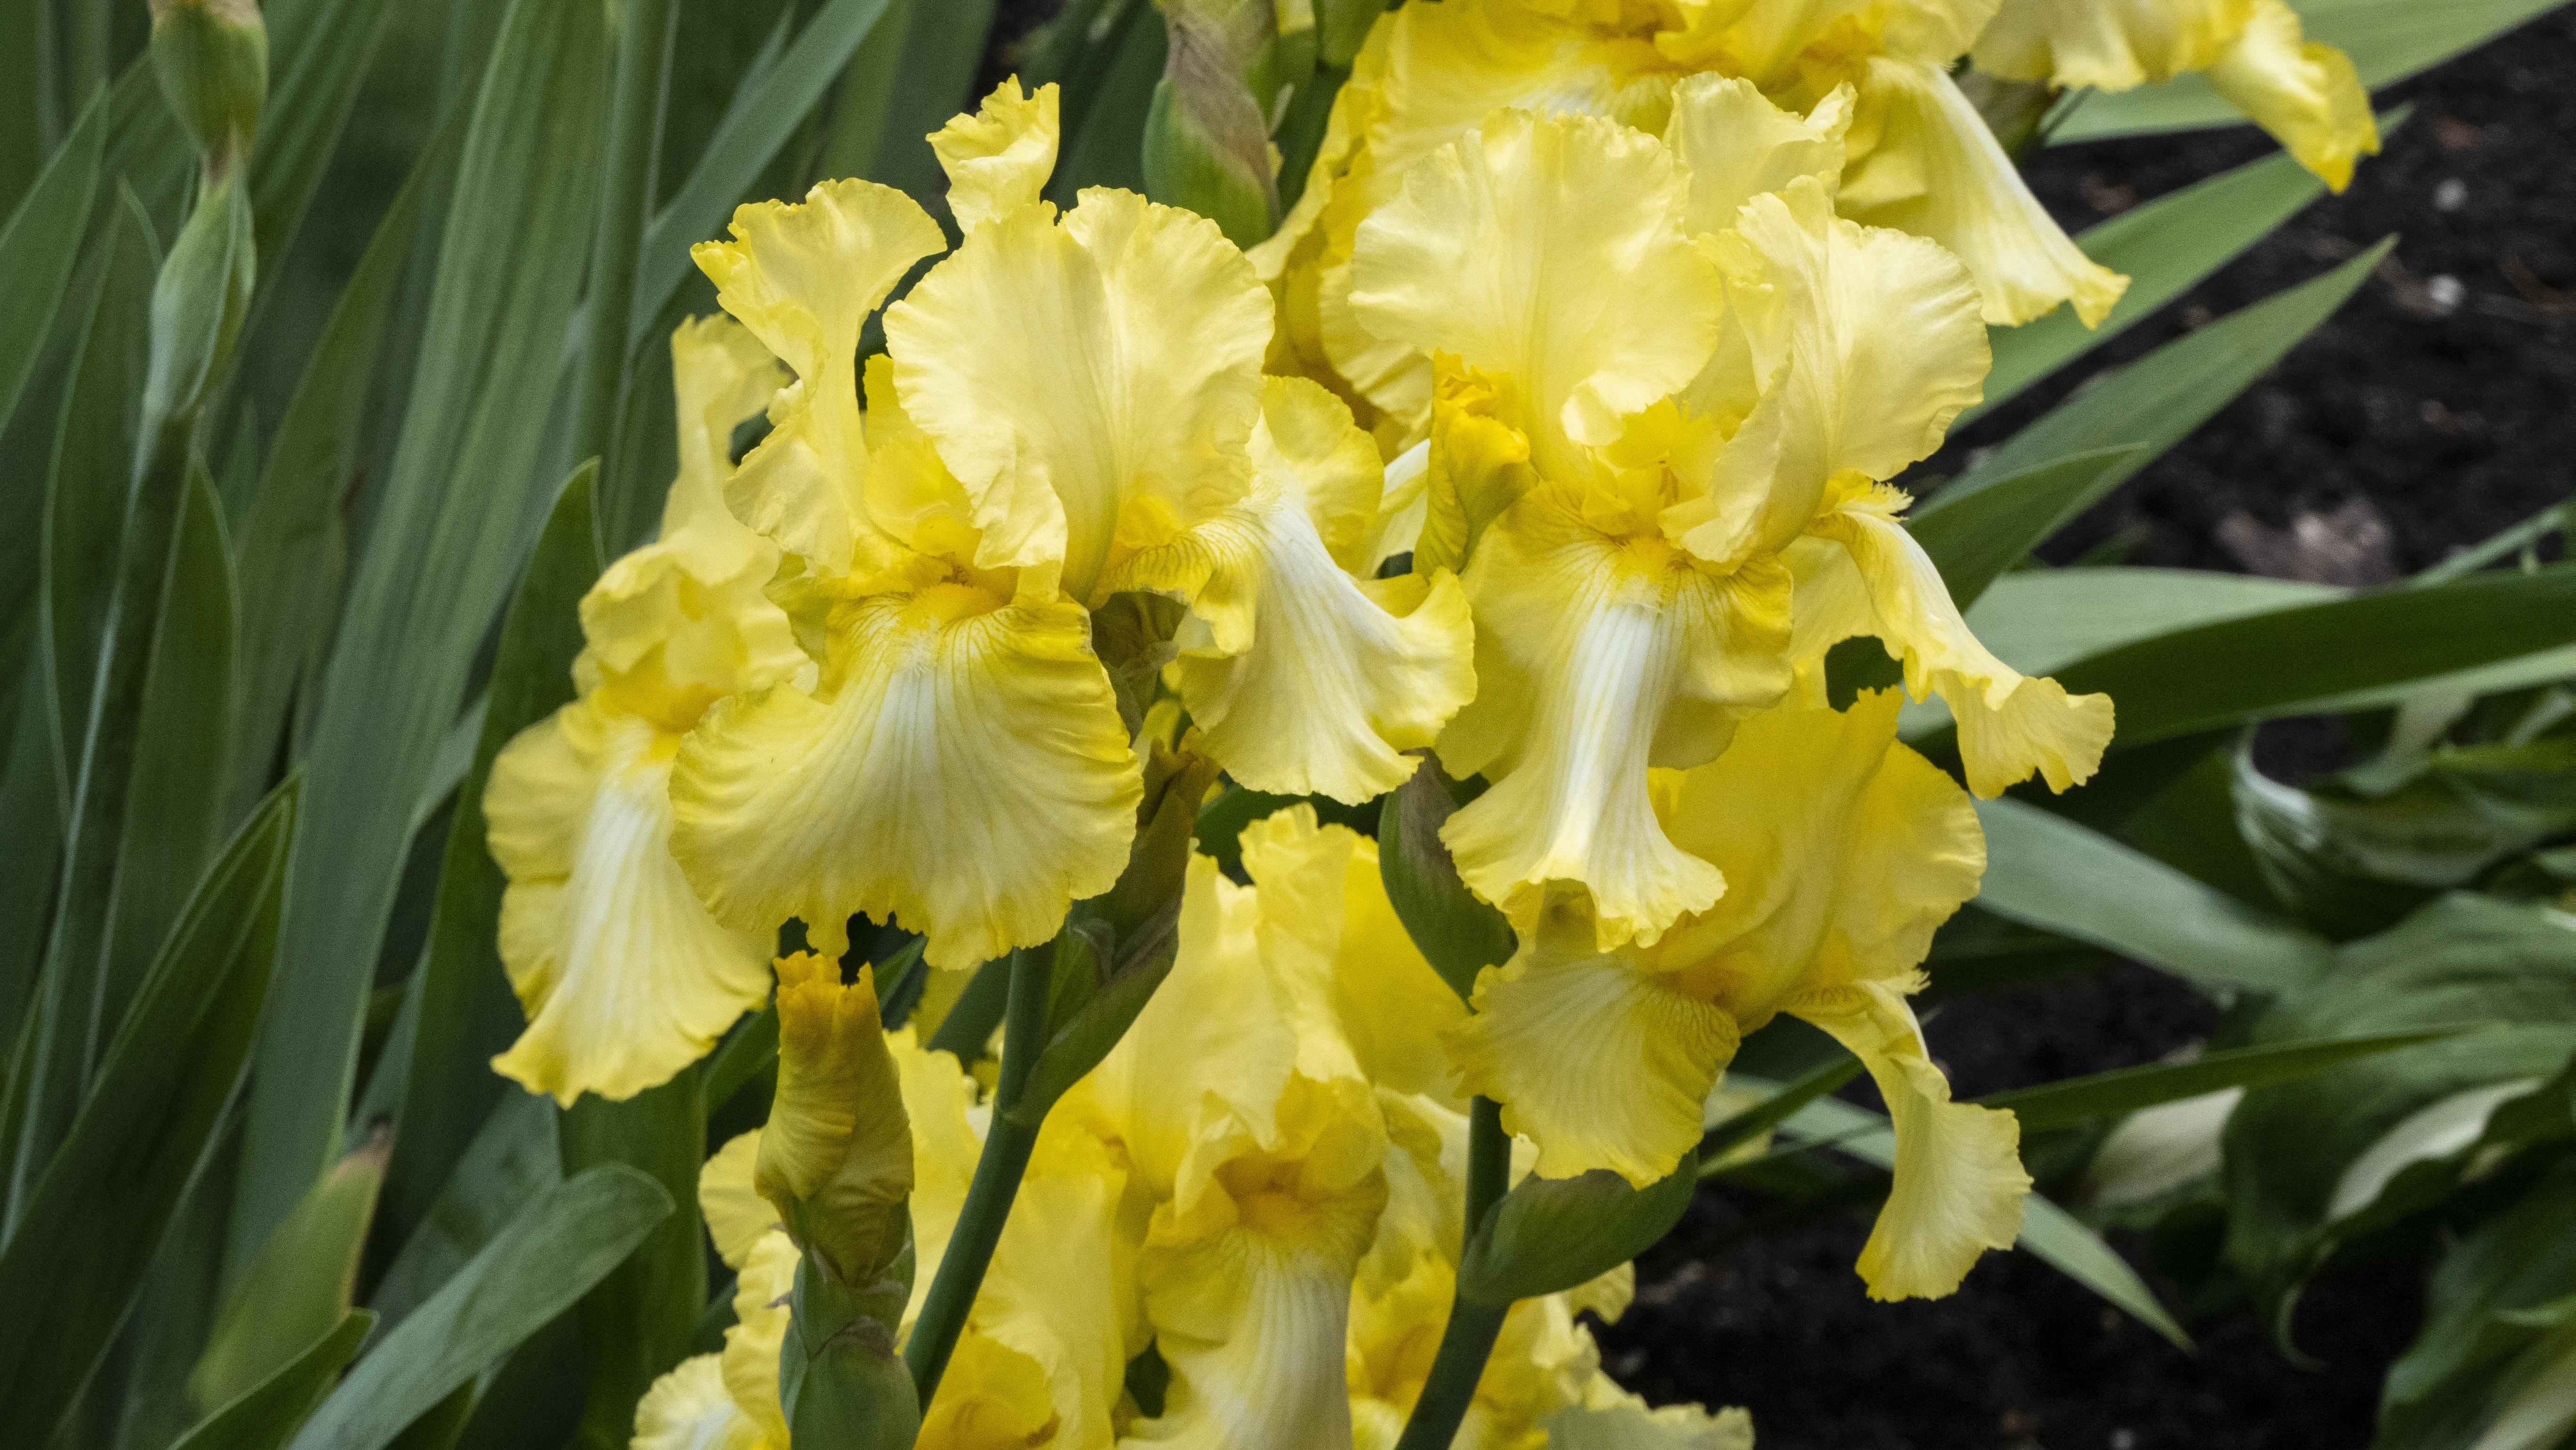 Iris Germanica 'Harvest of Memories' - Tall Bearded Iris from Leo Berbee Bulb Company